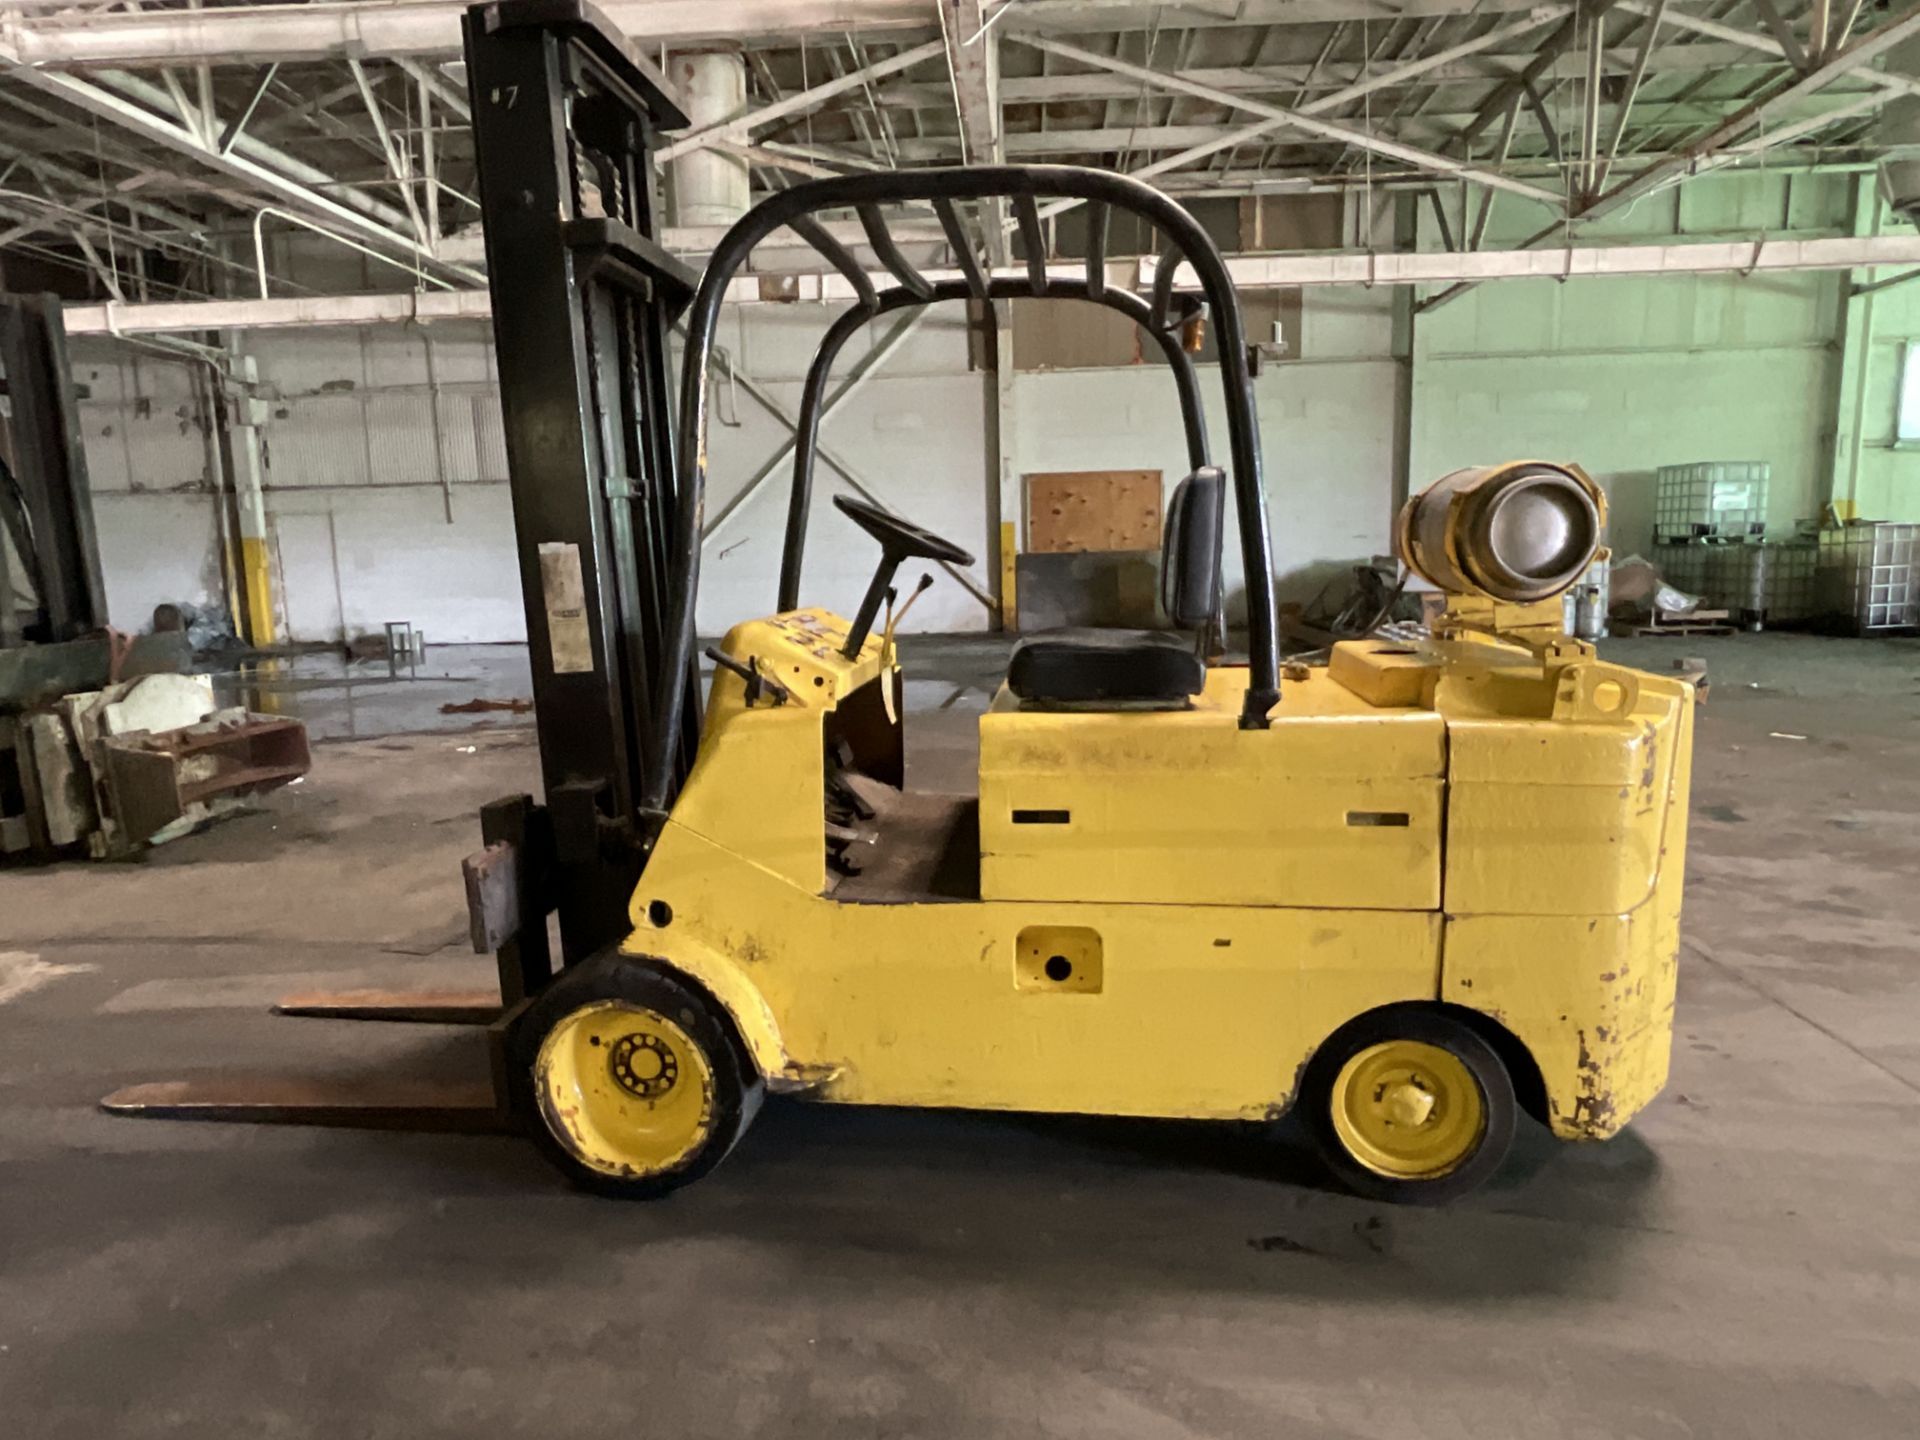 Caterpillar Forklift 12,000 lift , weight 15,090 model T120c 107” height 4 ft forks LP gas